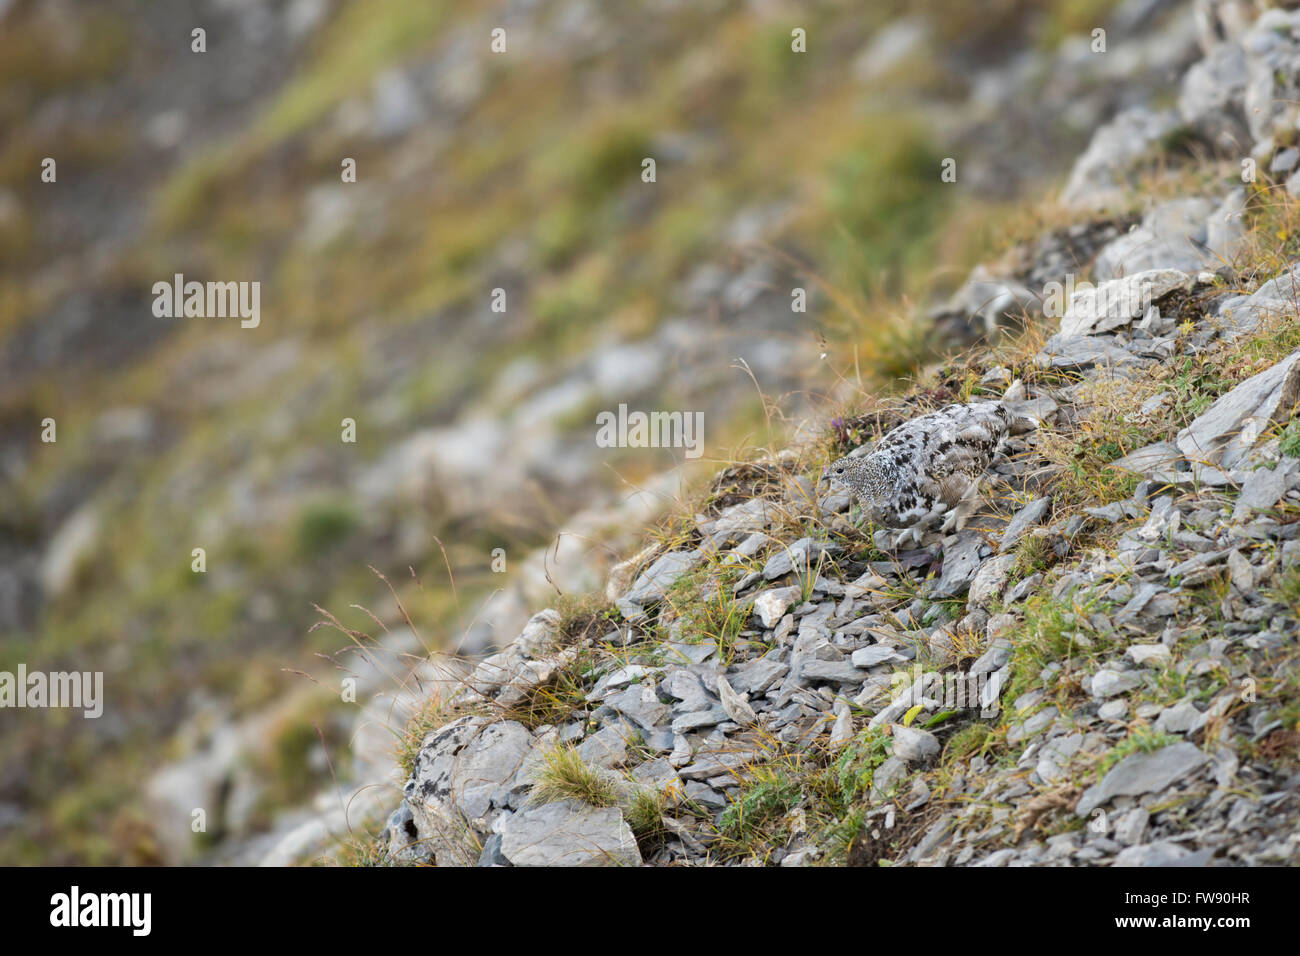 Rock Ptarmigan / Alpenschneehuhn ( Lagopus muta ), adult in brown summer garb, perfect camouflage in natural habitat. Stock Photo